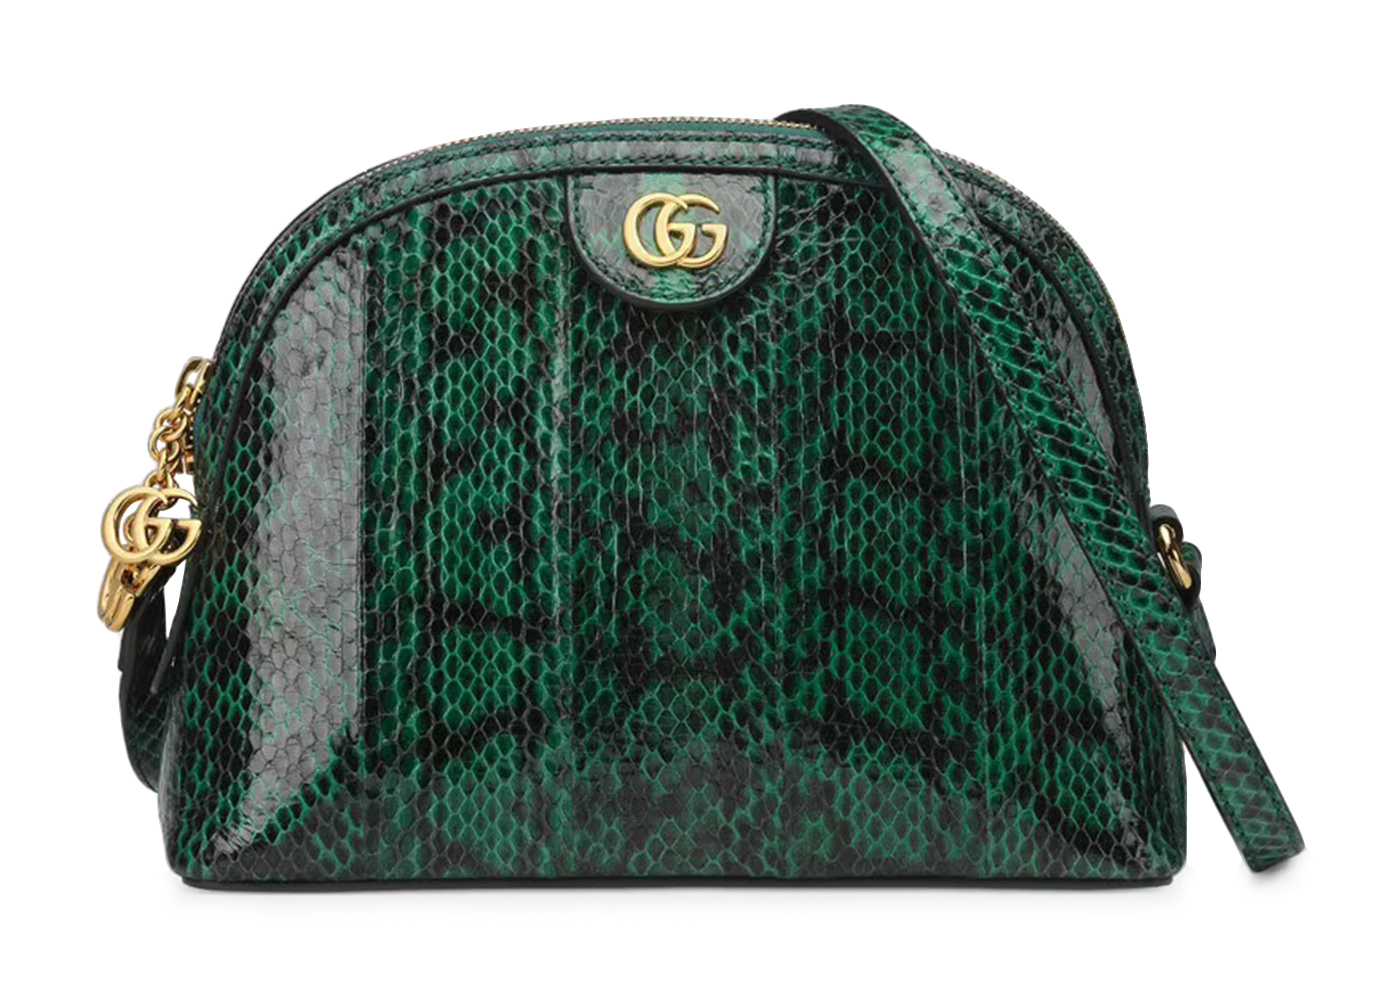 Gucci Thiara Genuine Python & Leather Shoulder Bag | Miamitwice